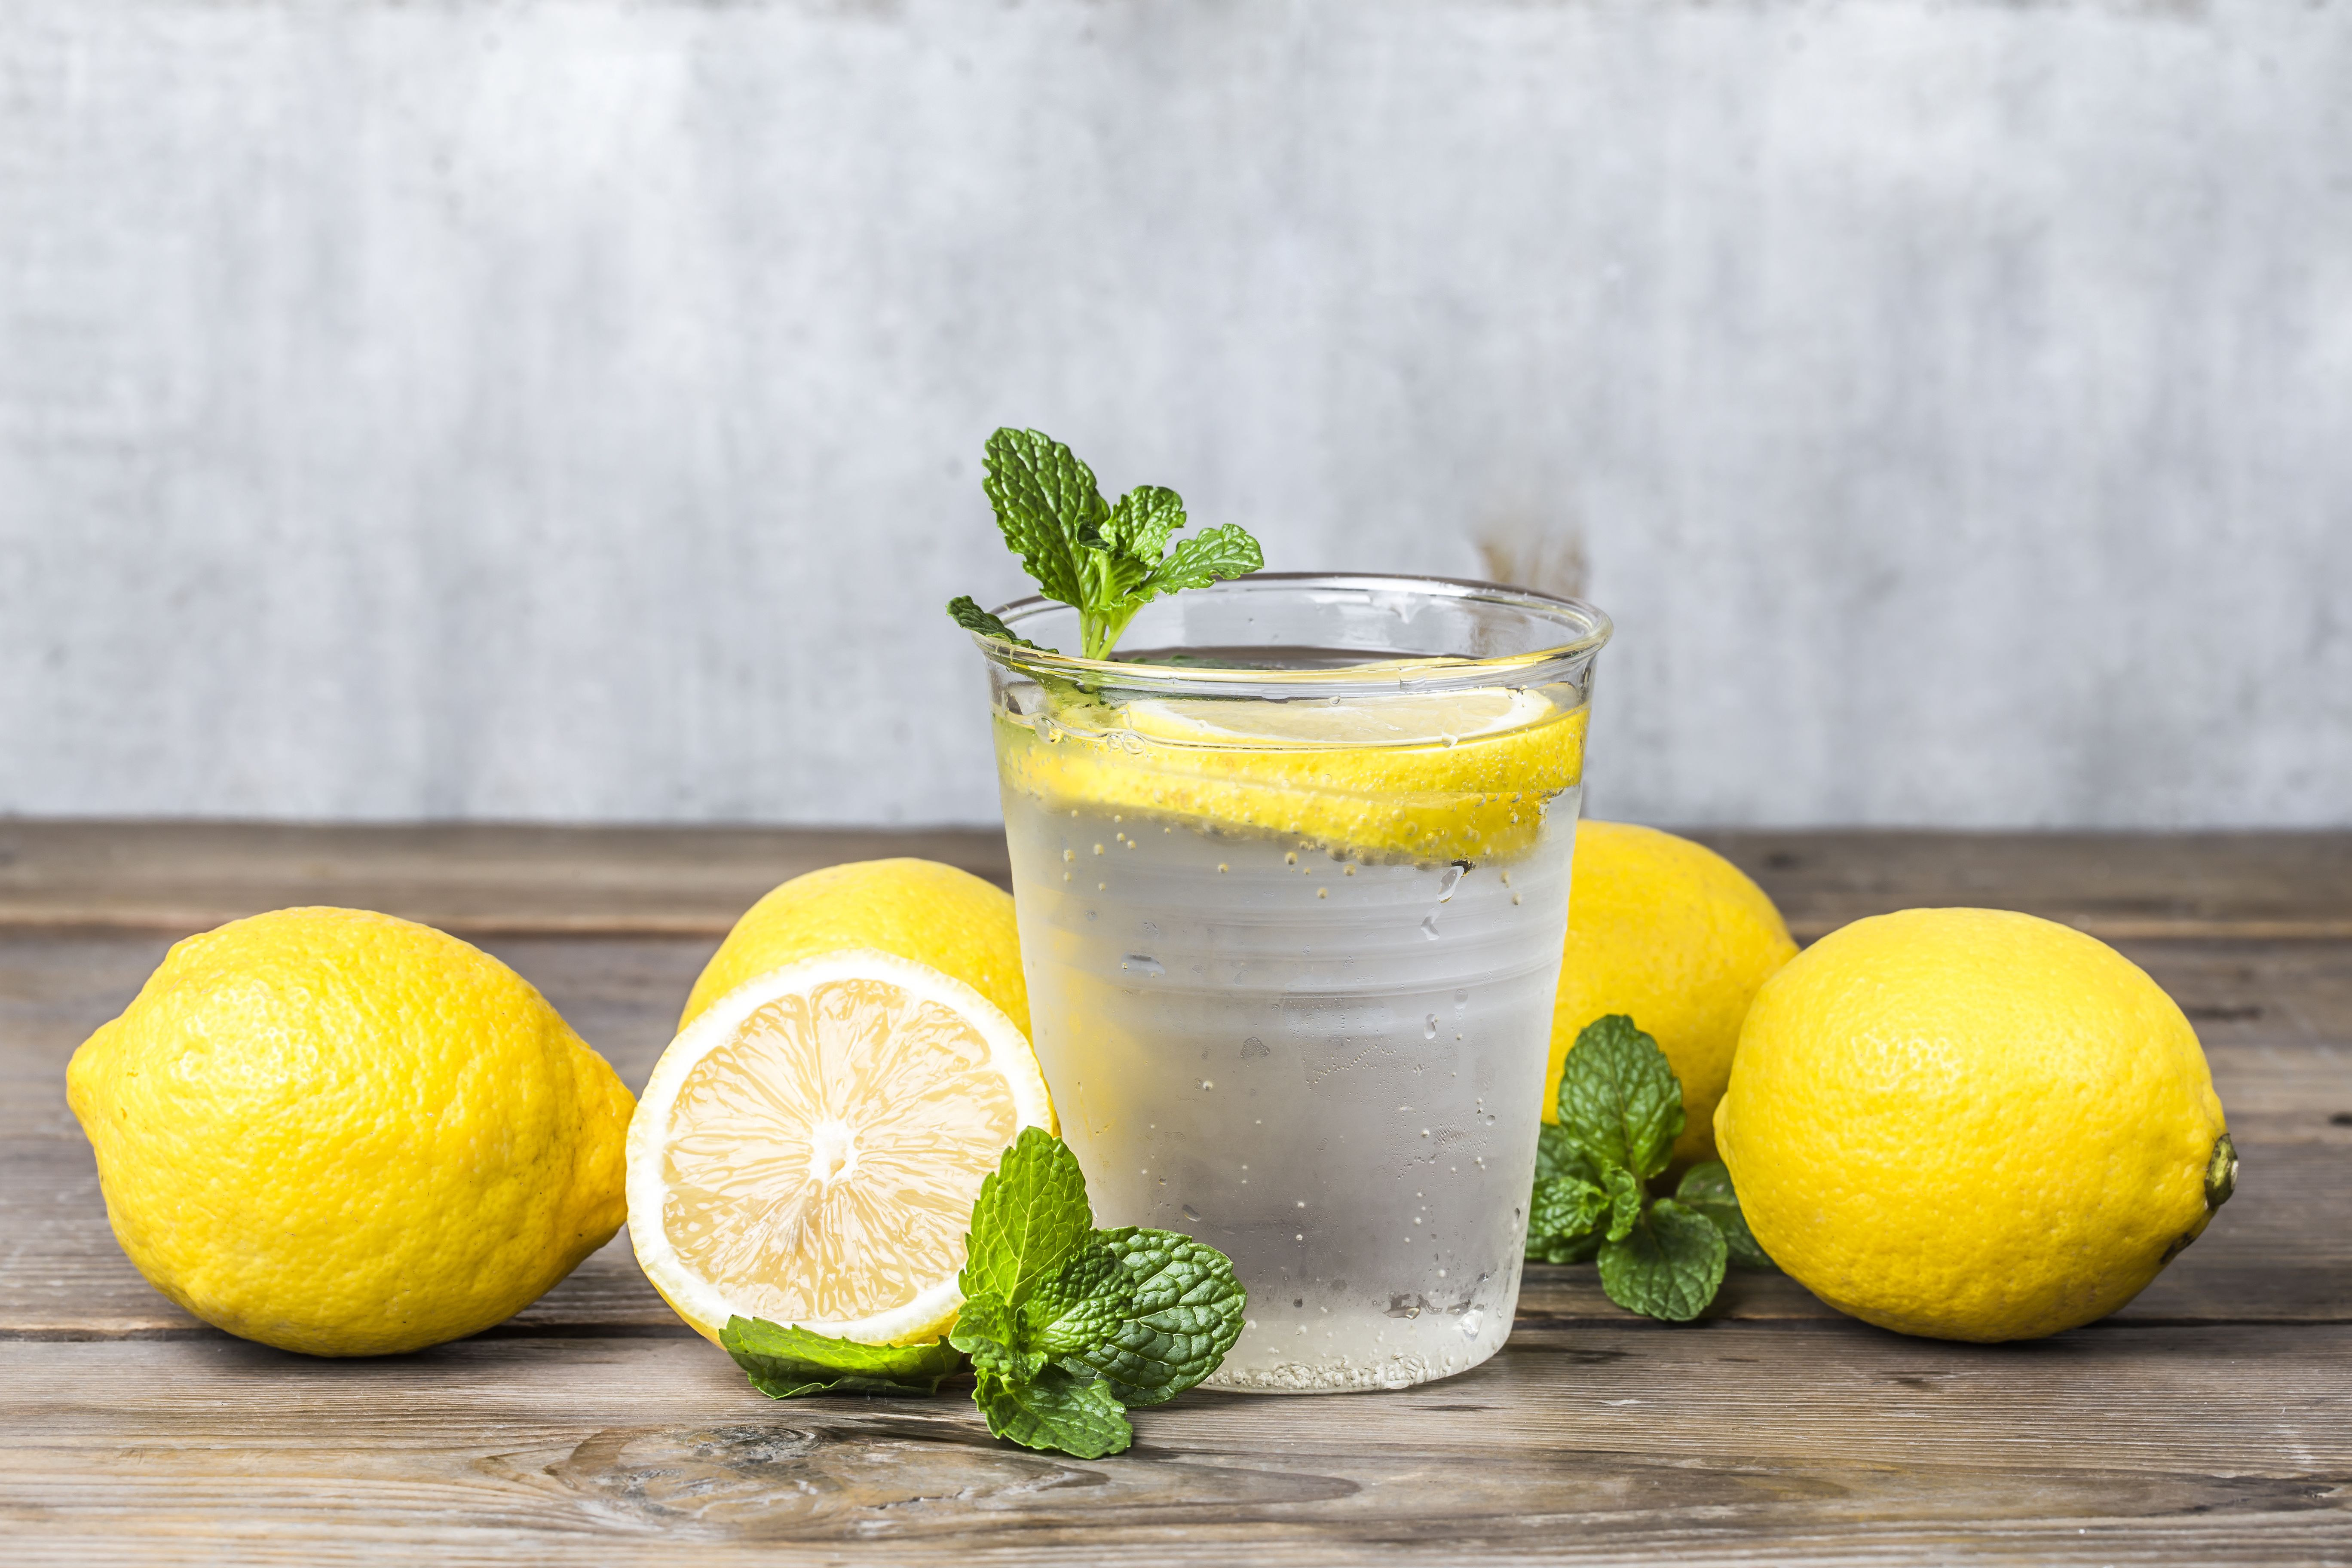 Вода с лимон на тощак. Нимбу пани. Лимонад Fresh Lemon. Вода с лимоном. Домашний лимонад с мятой.